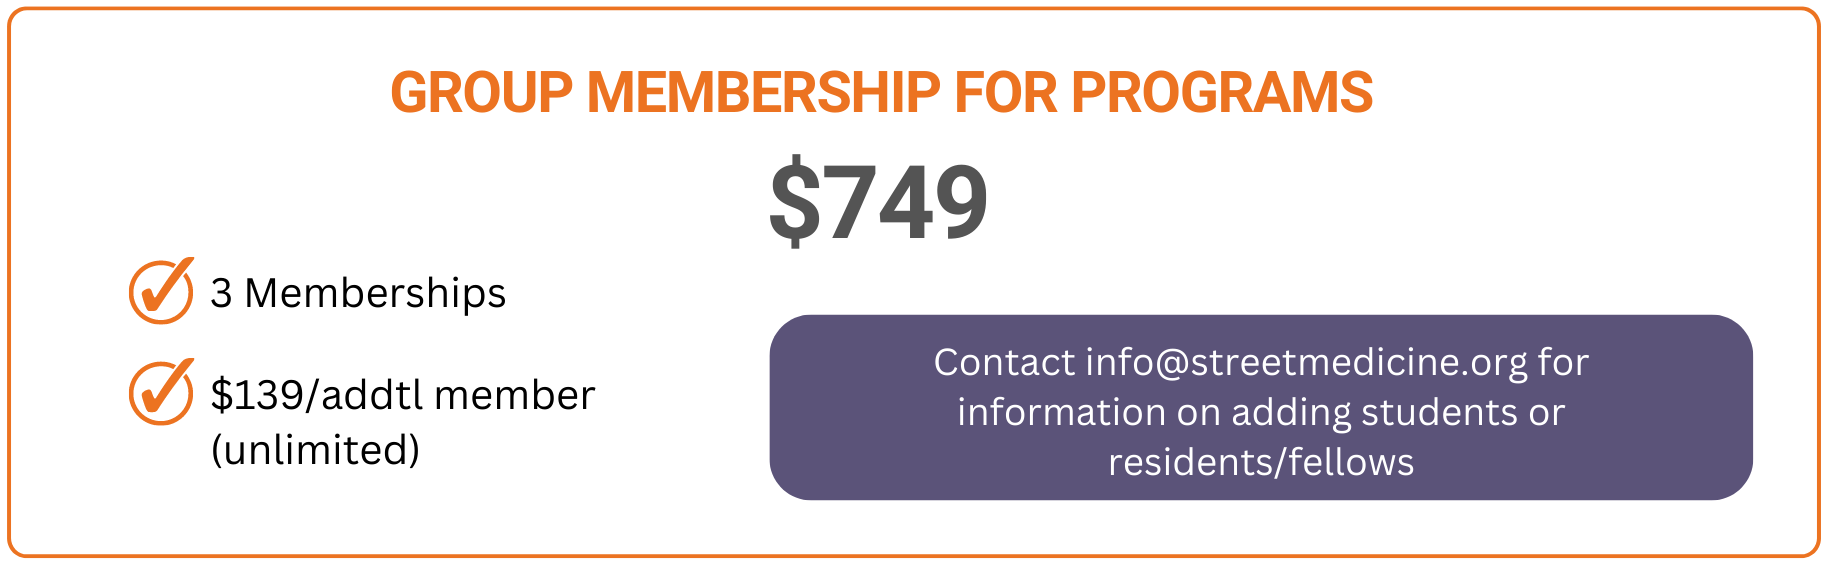 Group Program Membership